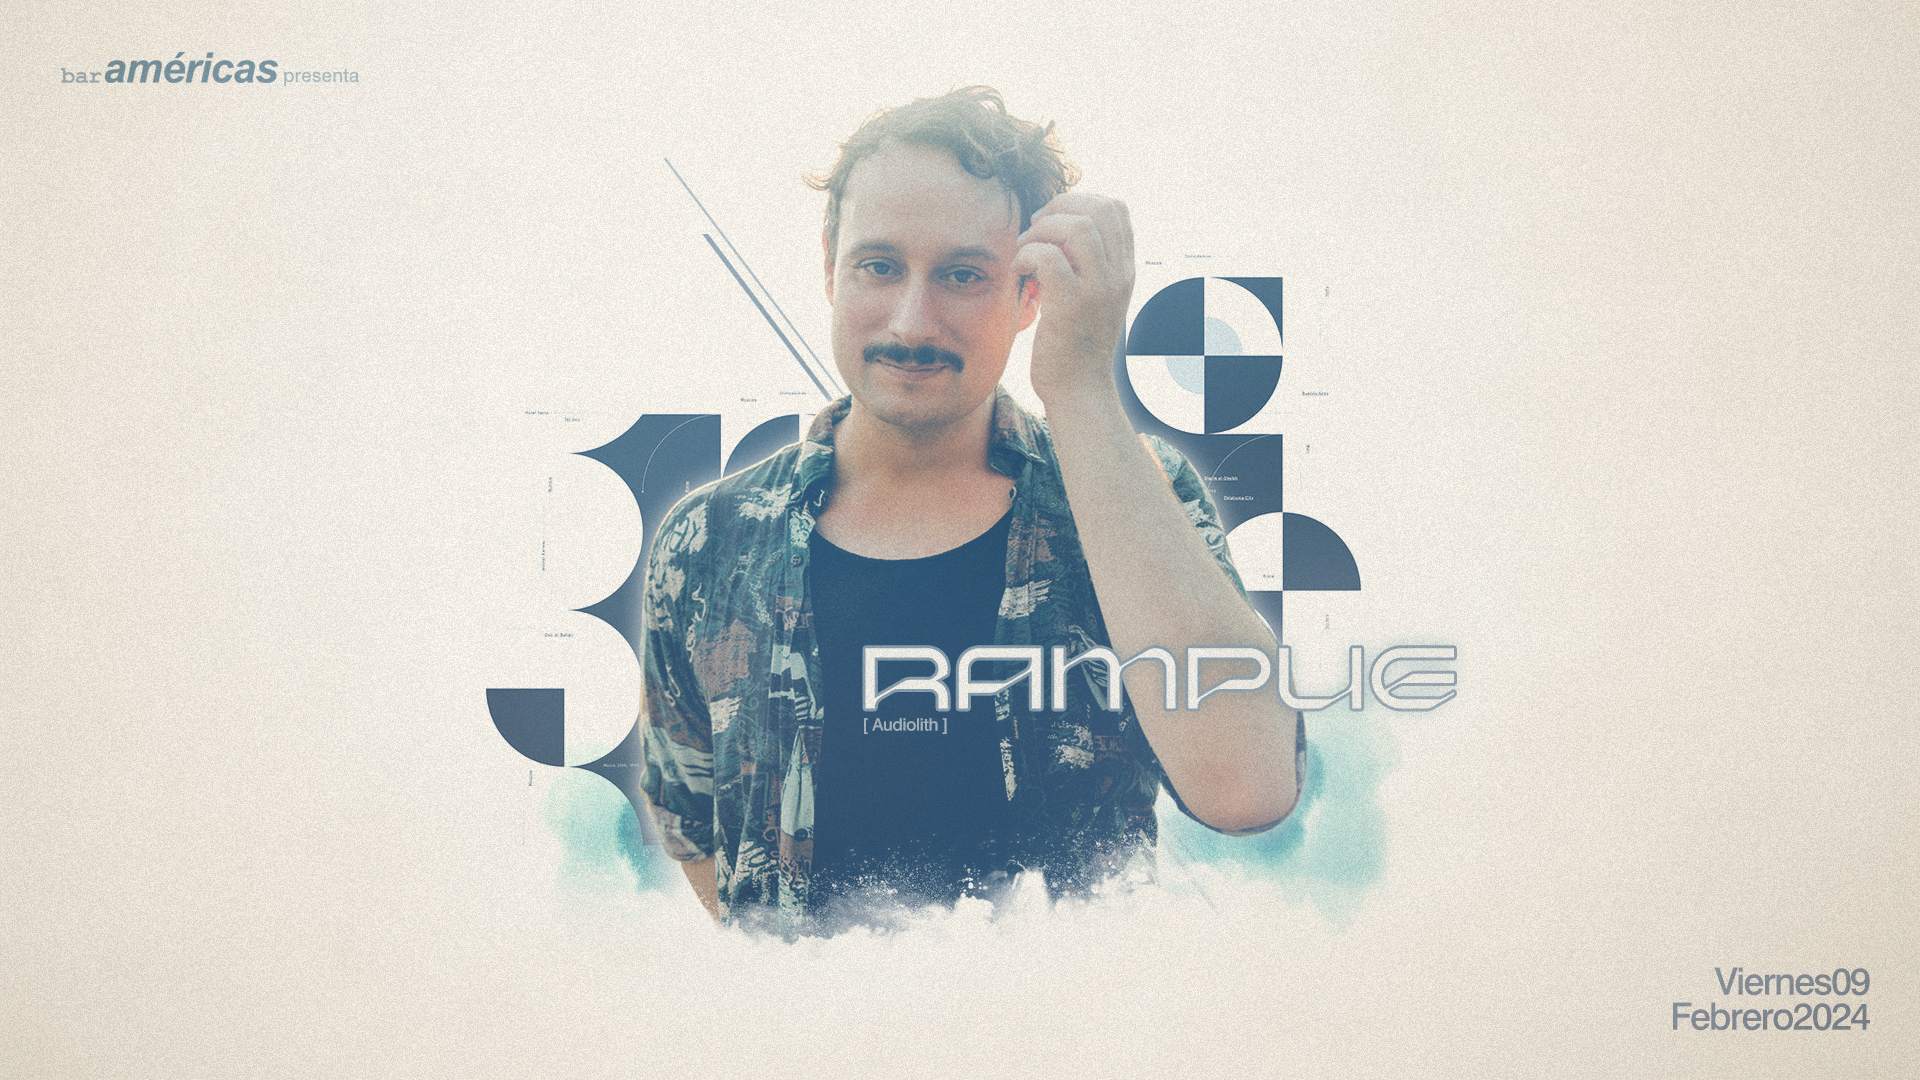 Rampue [Audiolith] - フライヤー表